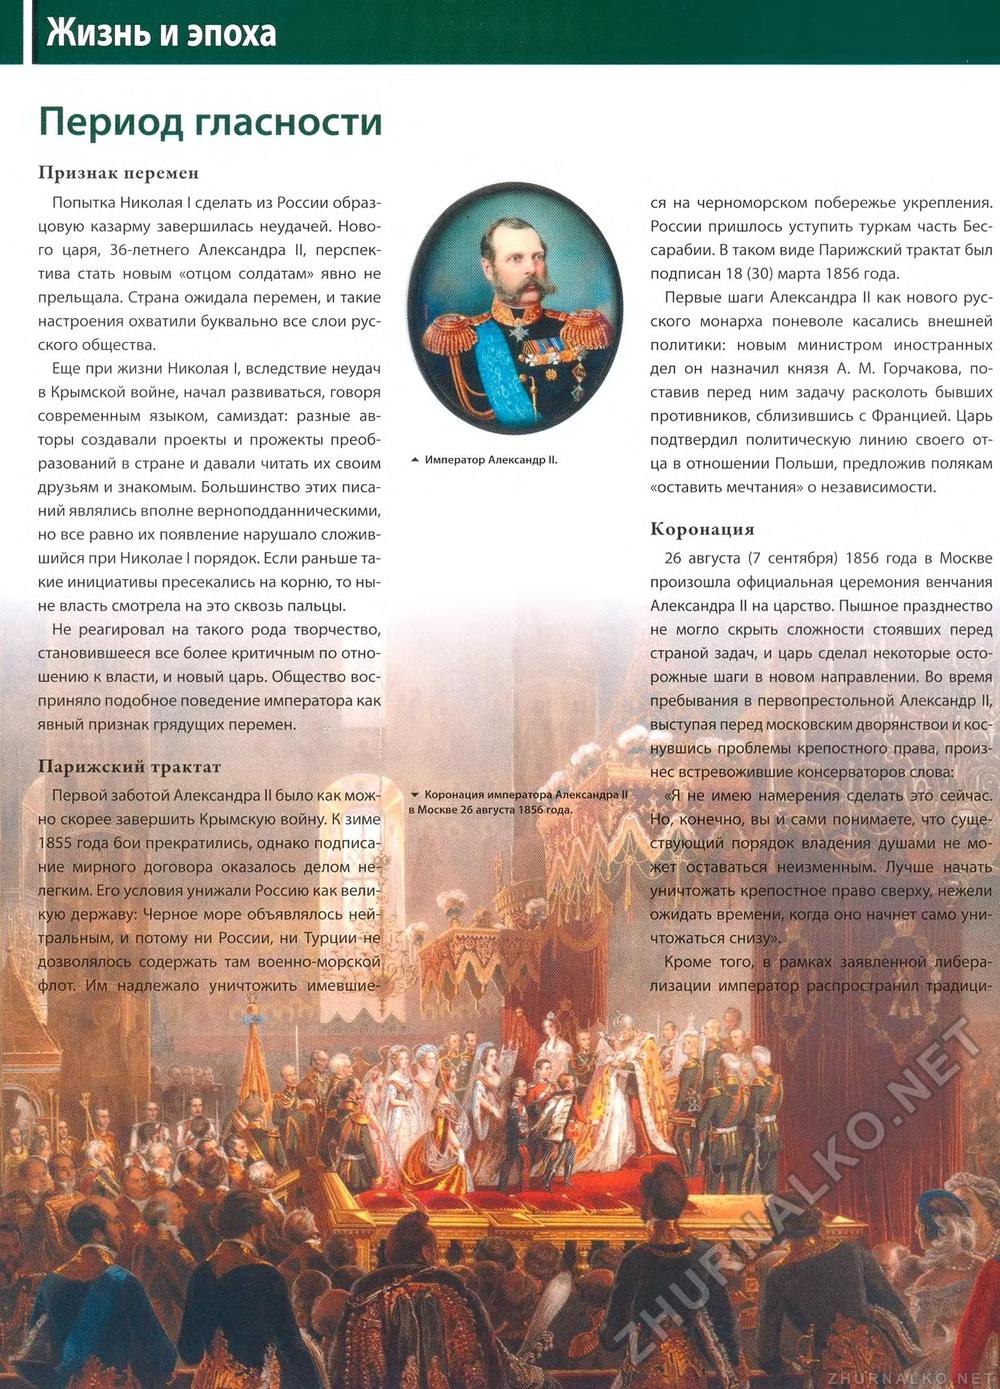 70. Александр II, страница 10